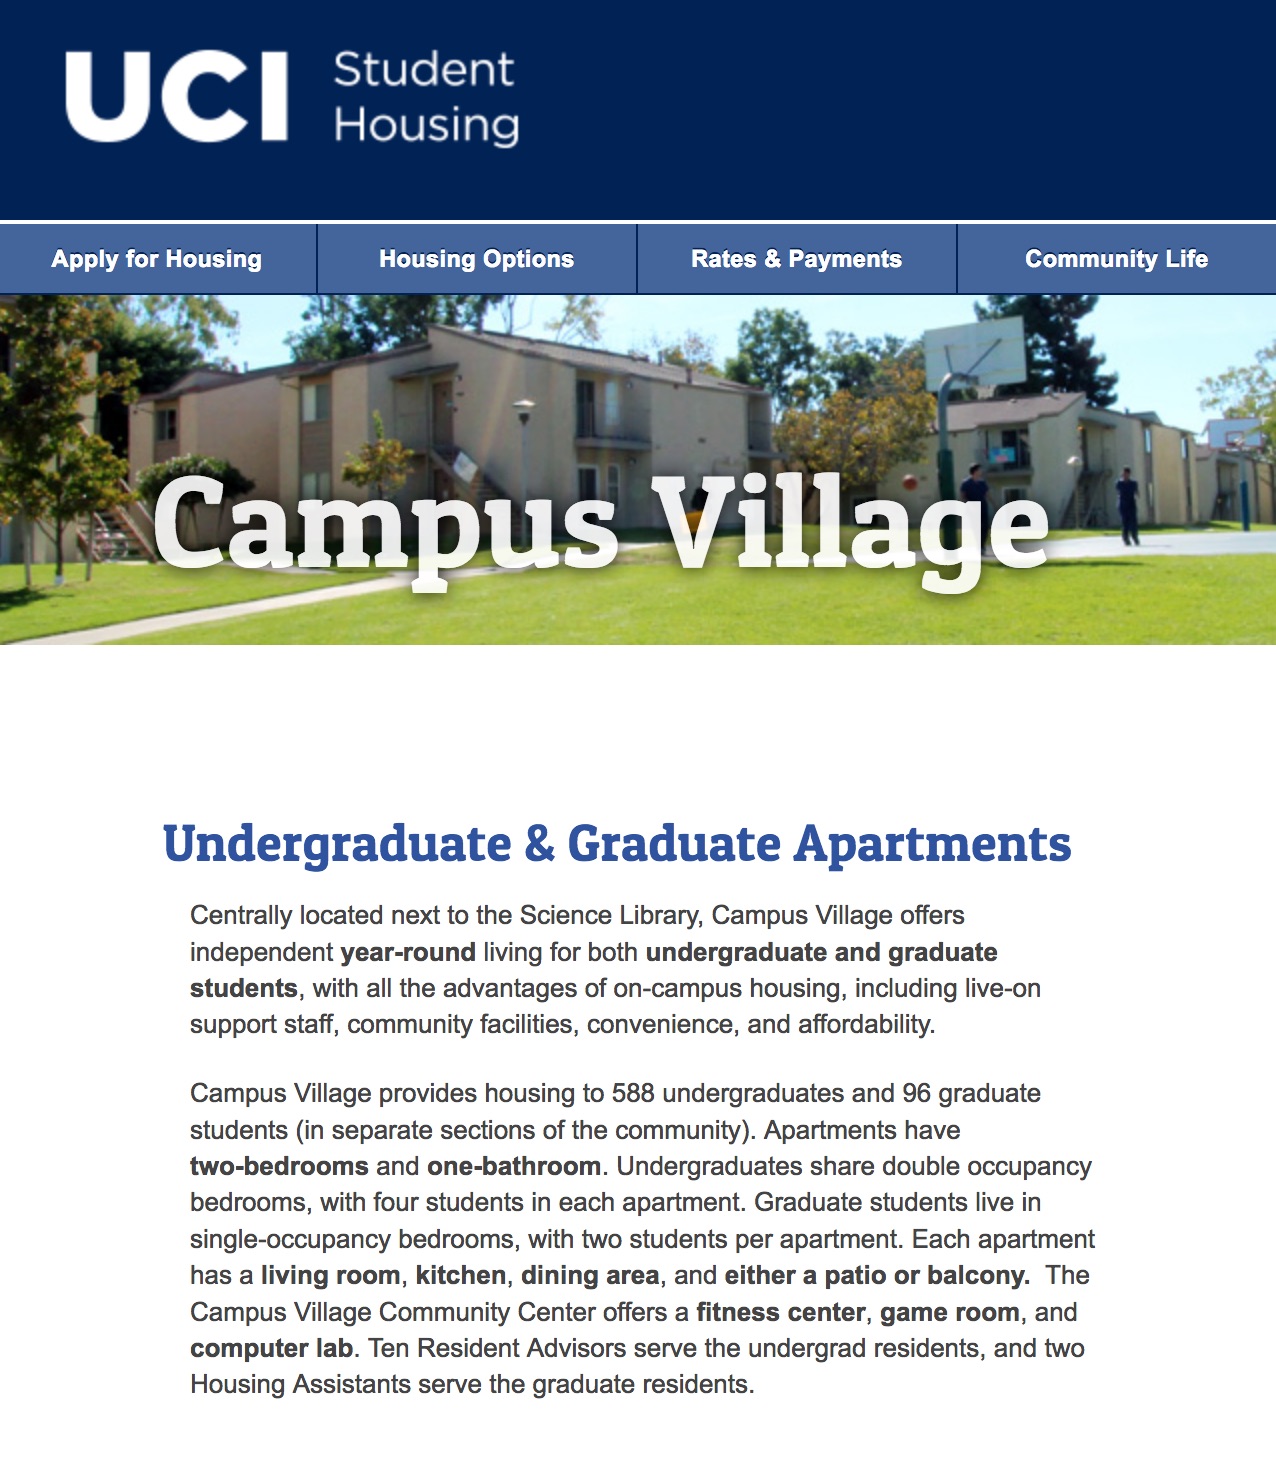 http://www.davisvanguard.org/wp-content/uploads/2017/05/UC-Irvine-On-Campus-Apartment-Description.jpg